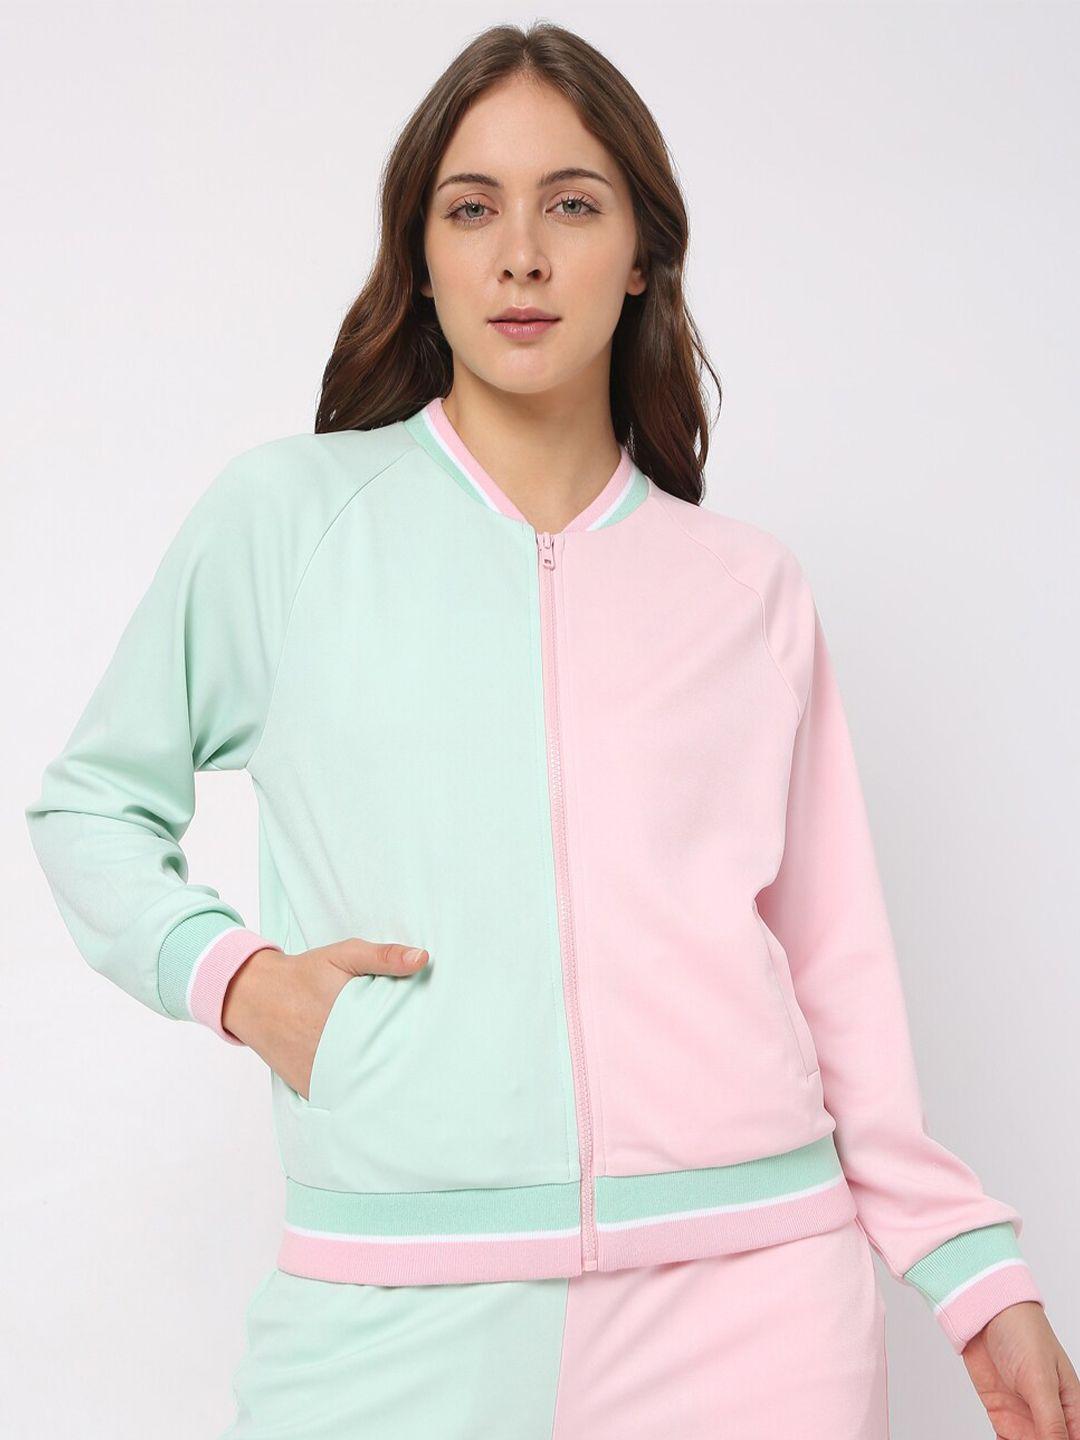 vero moda women pink & sea green colourblocked sweatshirt